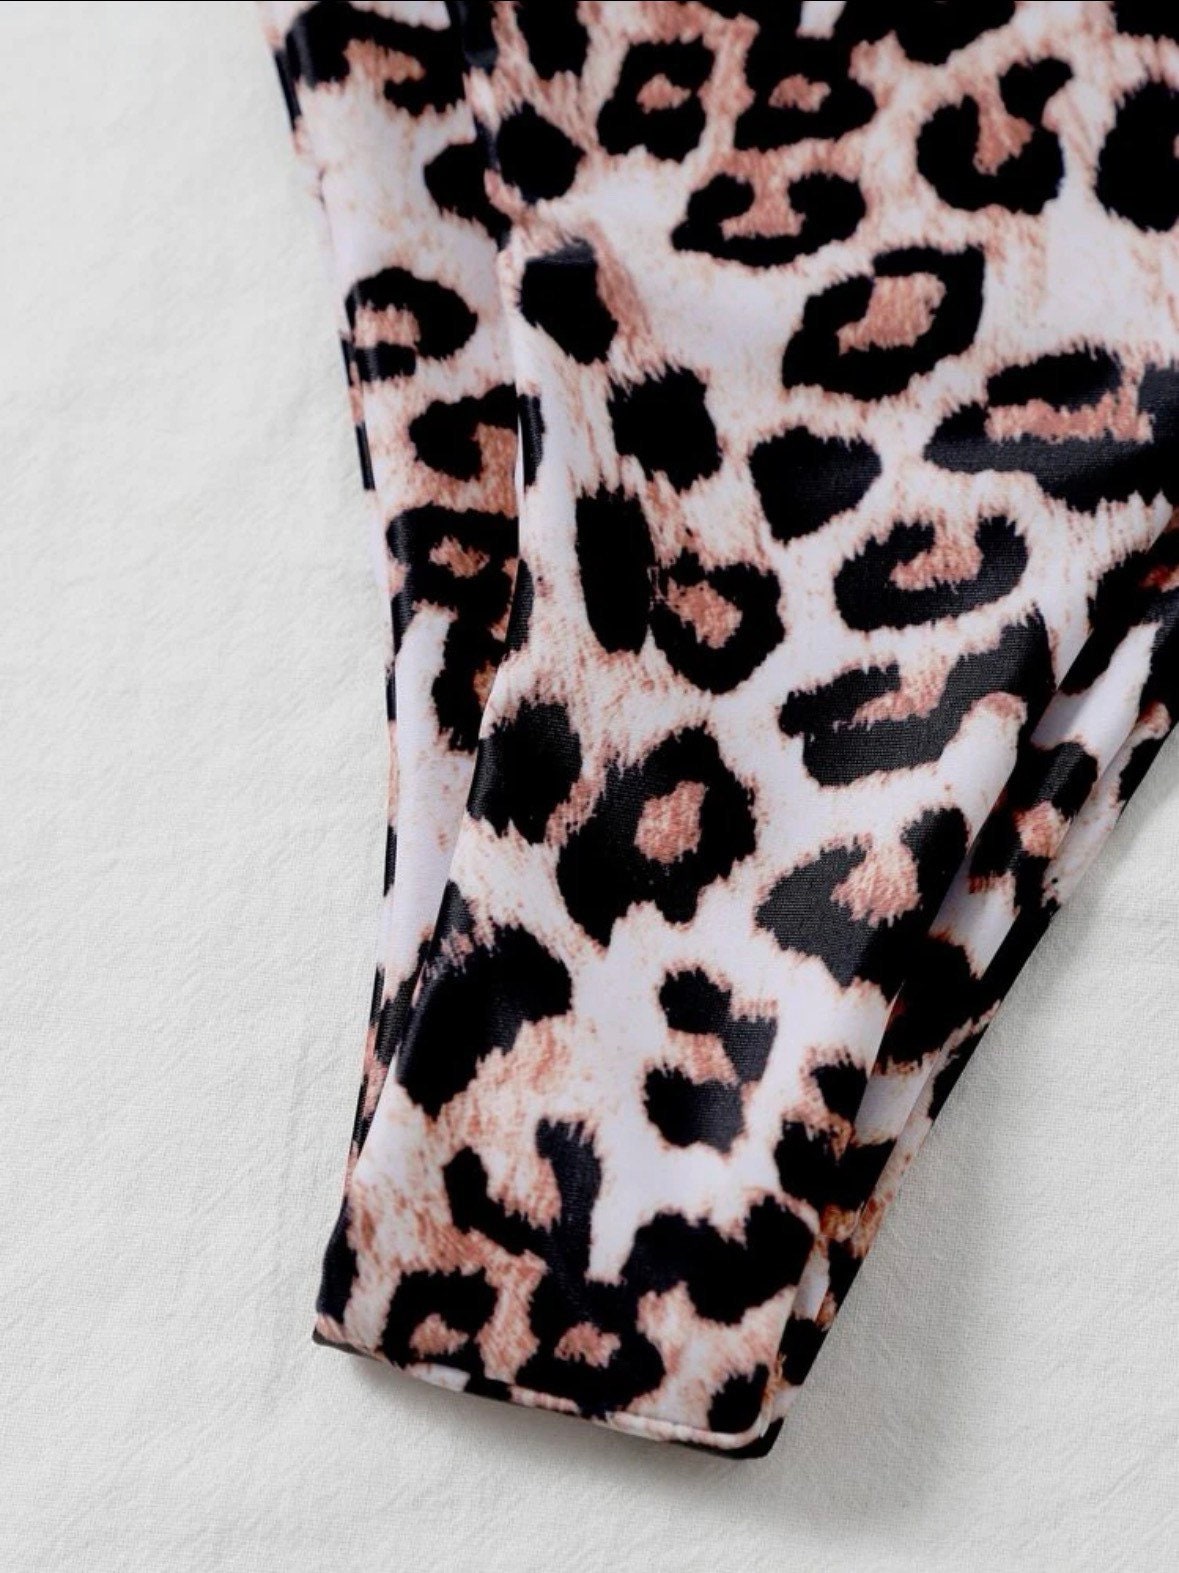 The LauLau Leopard Criss Cross Tie Around thong bikini leopard cheetah print details triangle top tie and bottoms swimsuit set